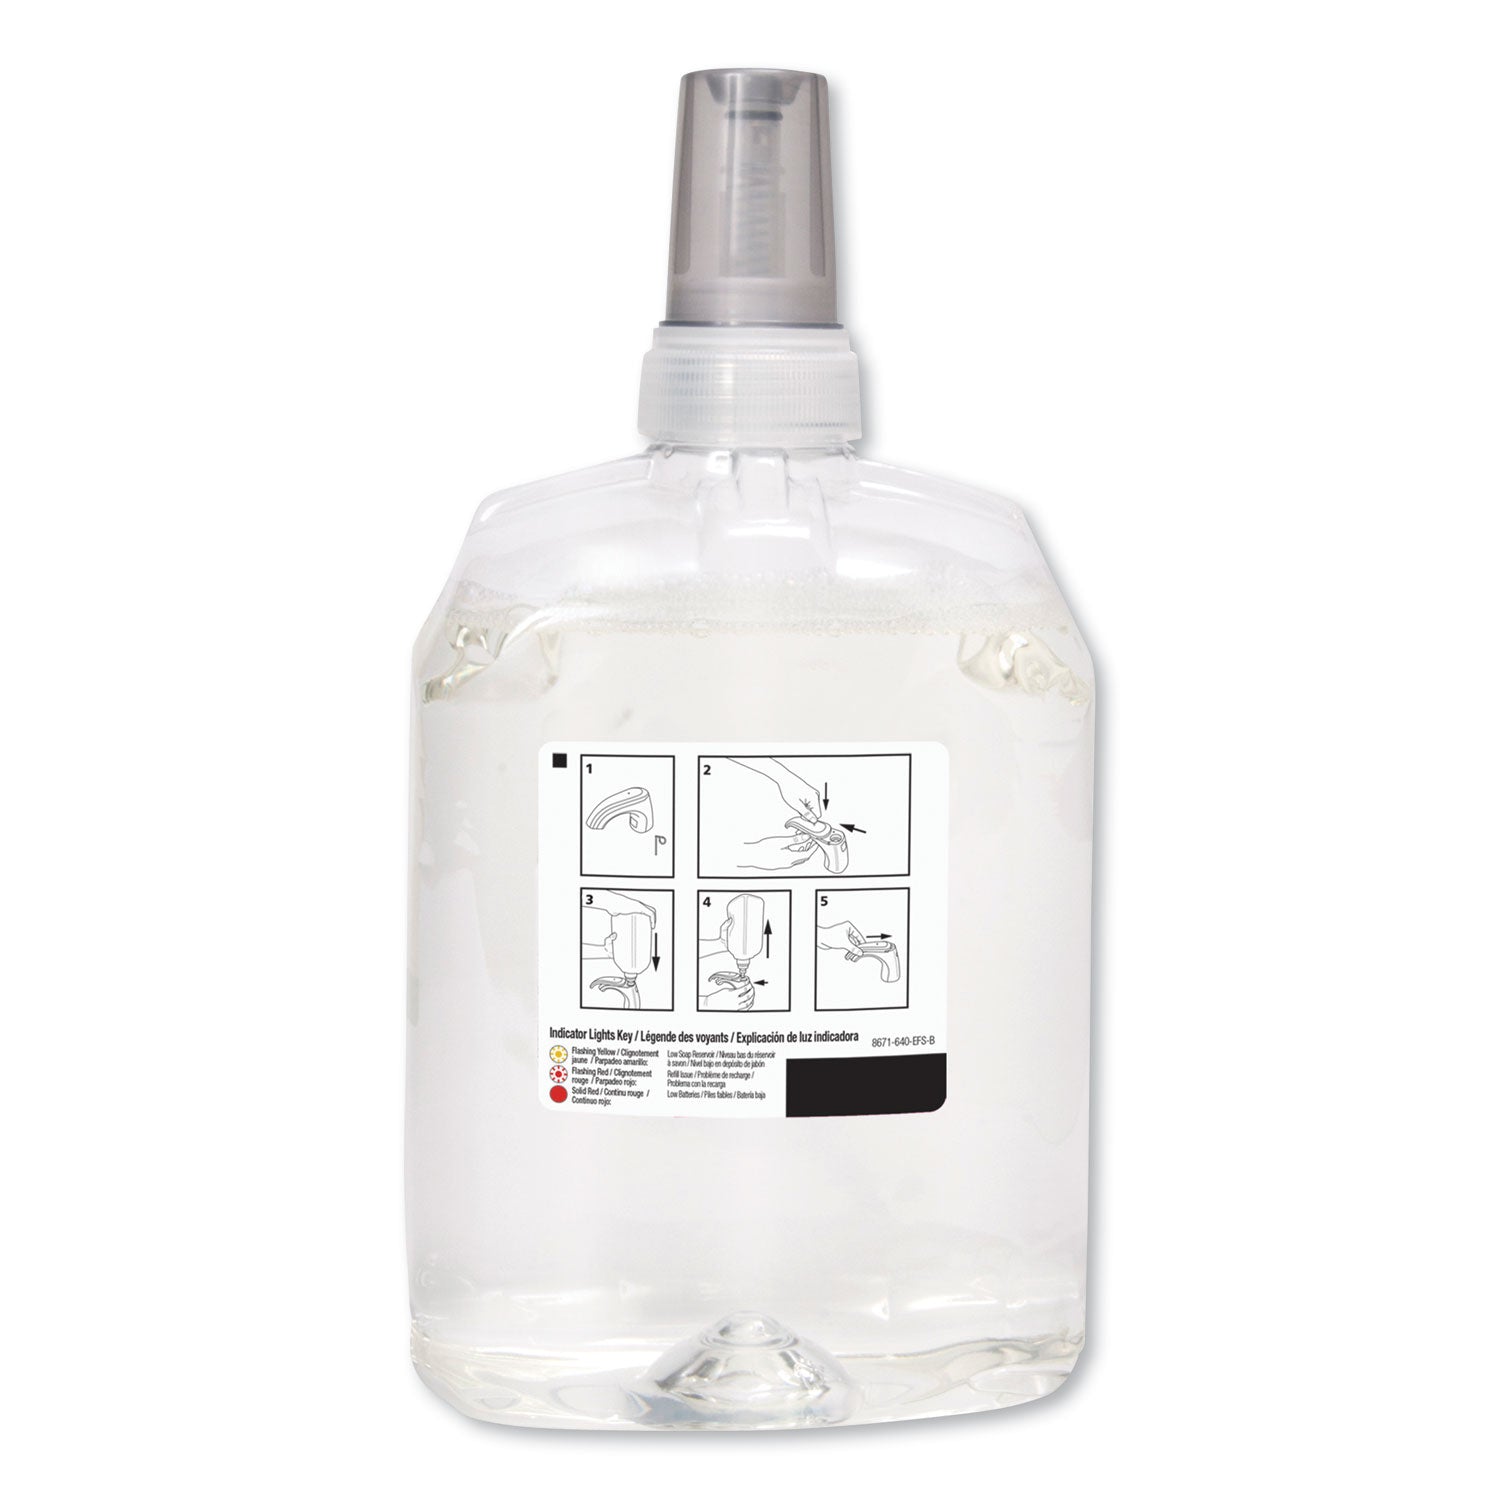 Purell Professional Redifoam Fragrance-Free Foam Soap, 2000 Ml, 4/Carton - GOJ867204CT